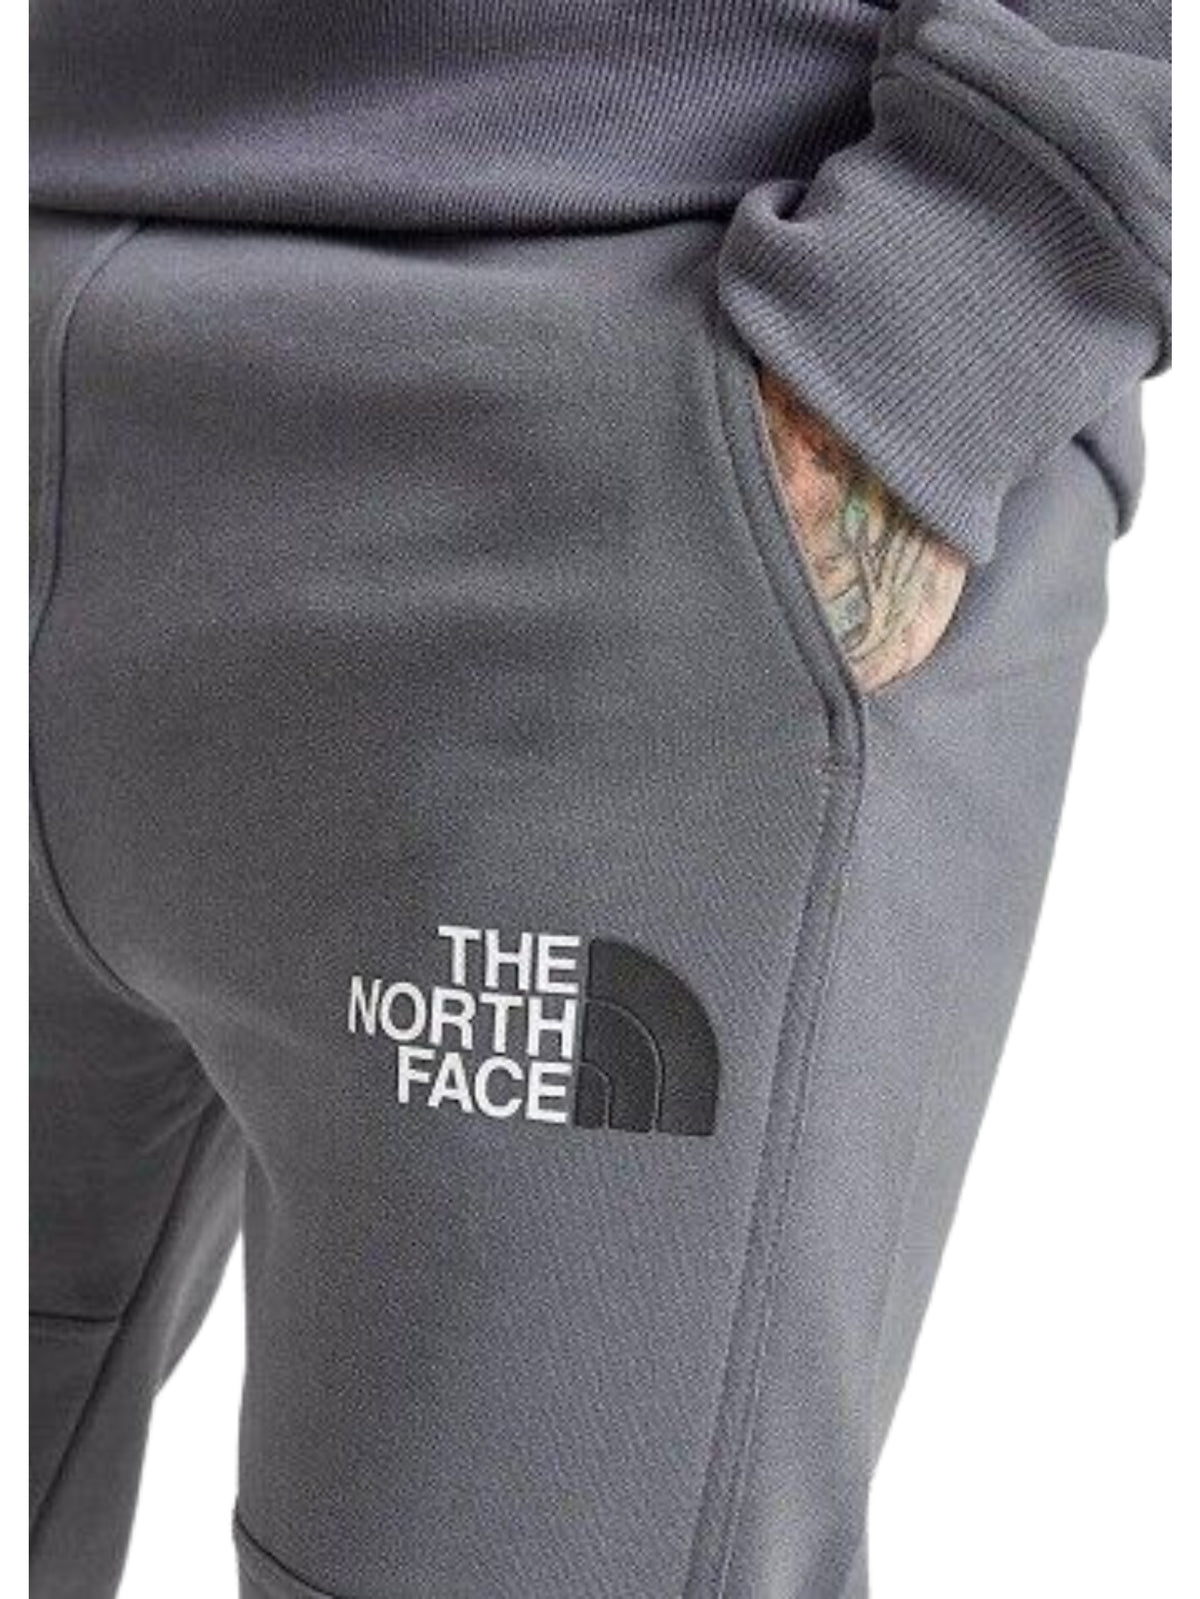 The North Face | Mens Regular Fit Joggers